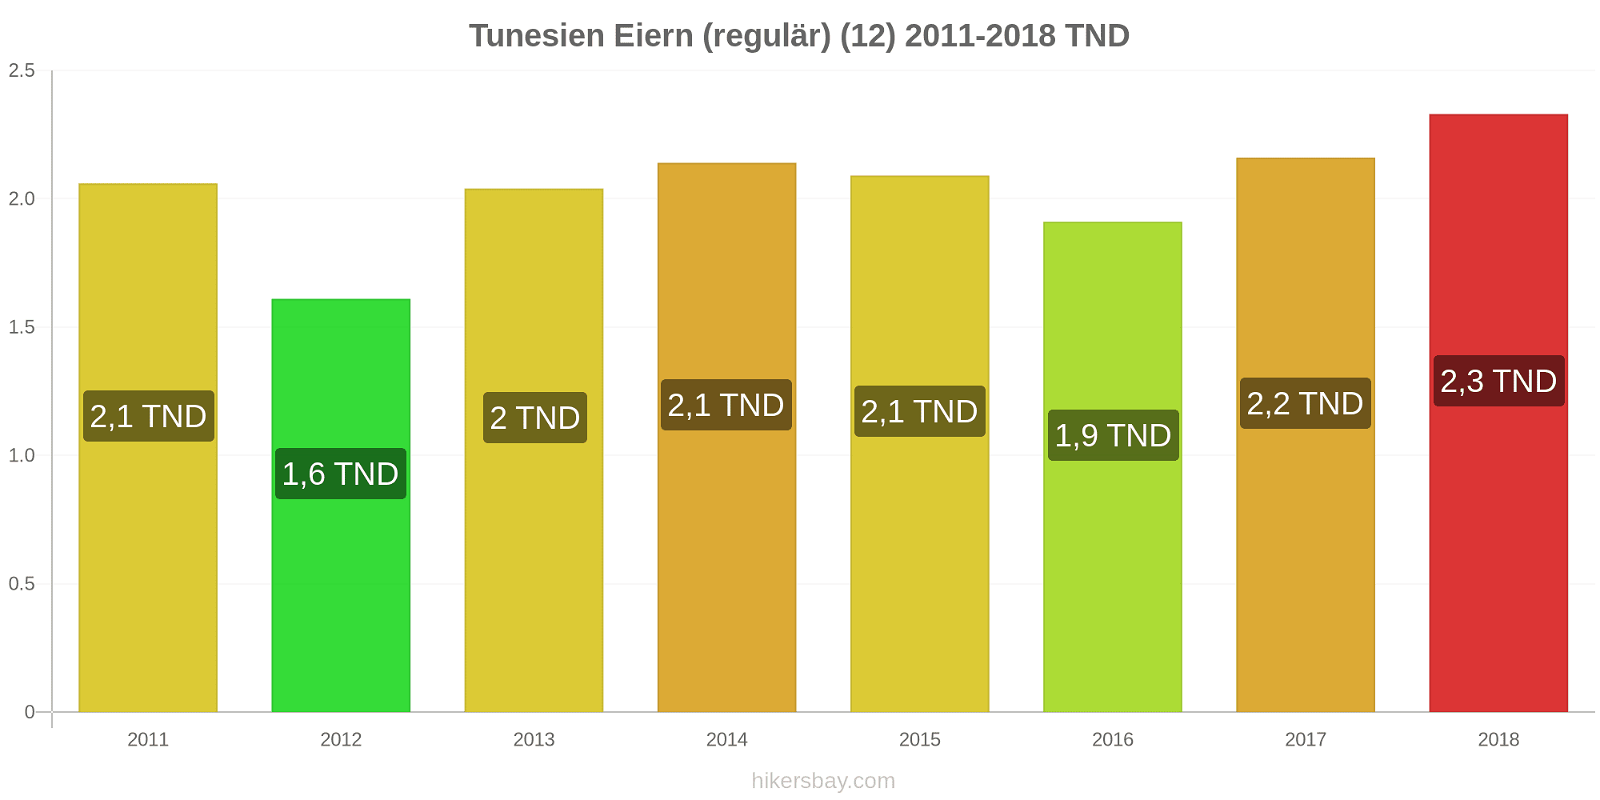 Tunesien Preisänderungen Eier (regelmäßig) (12) hikersbay.com